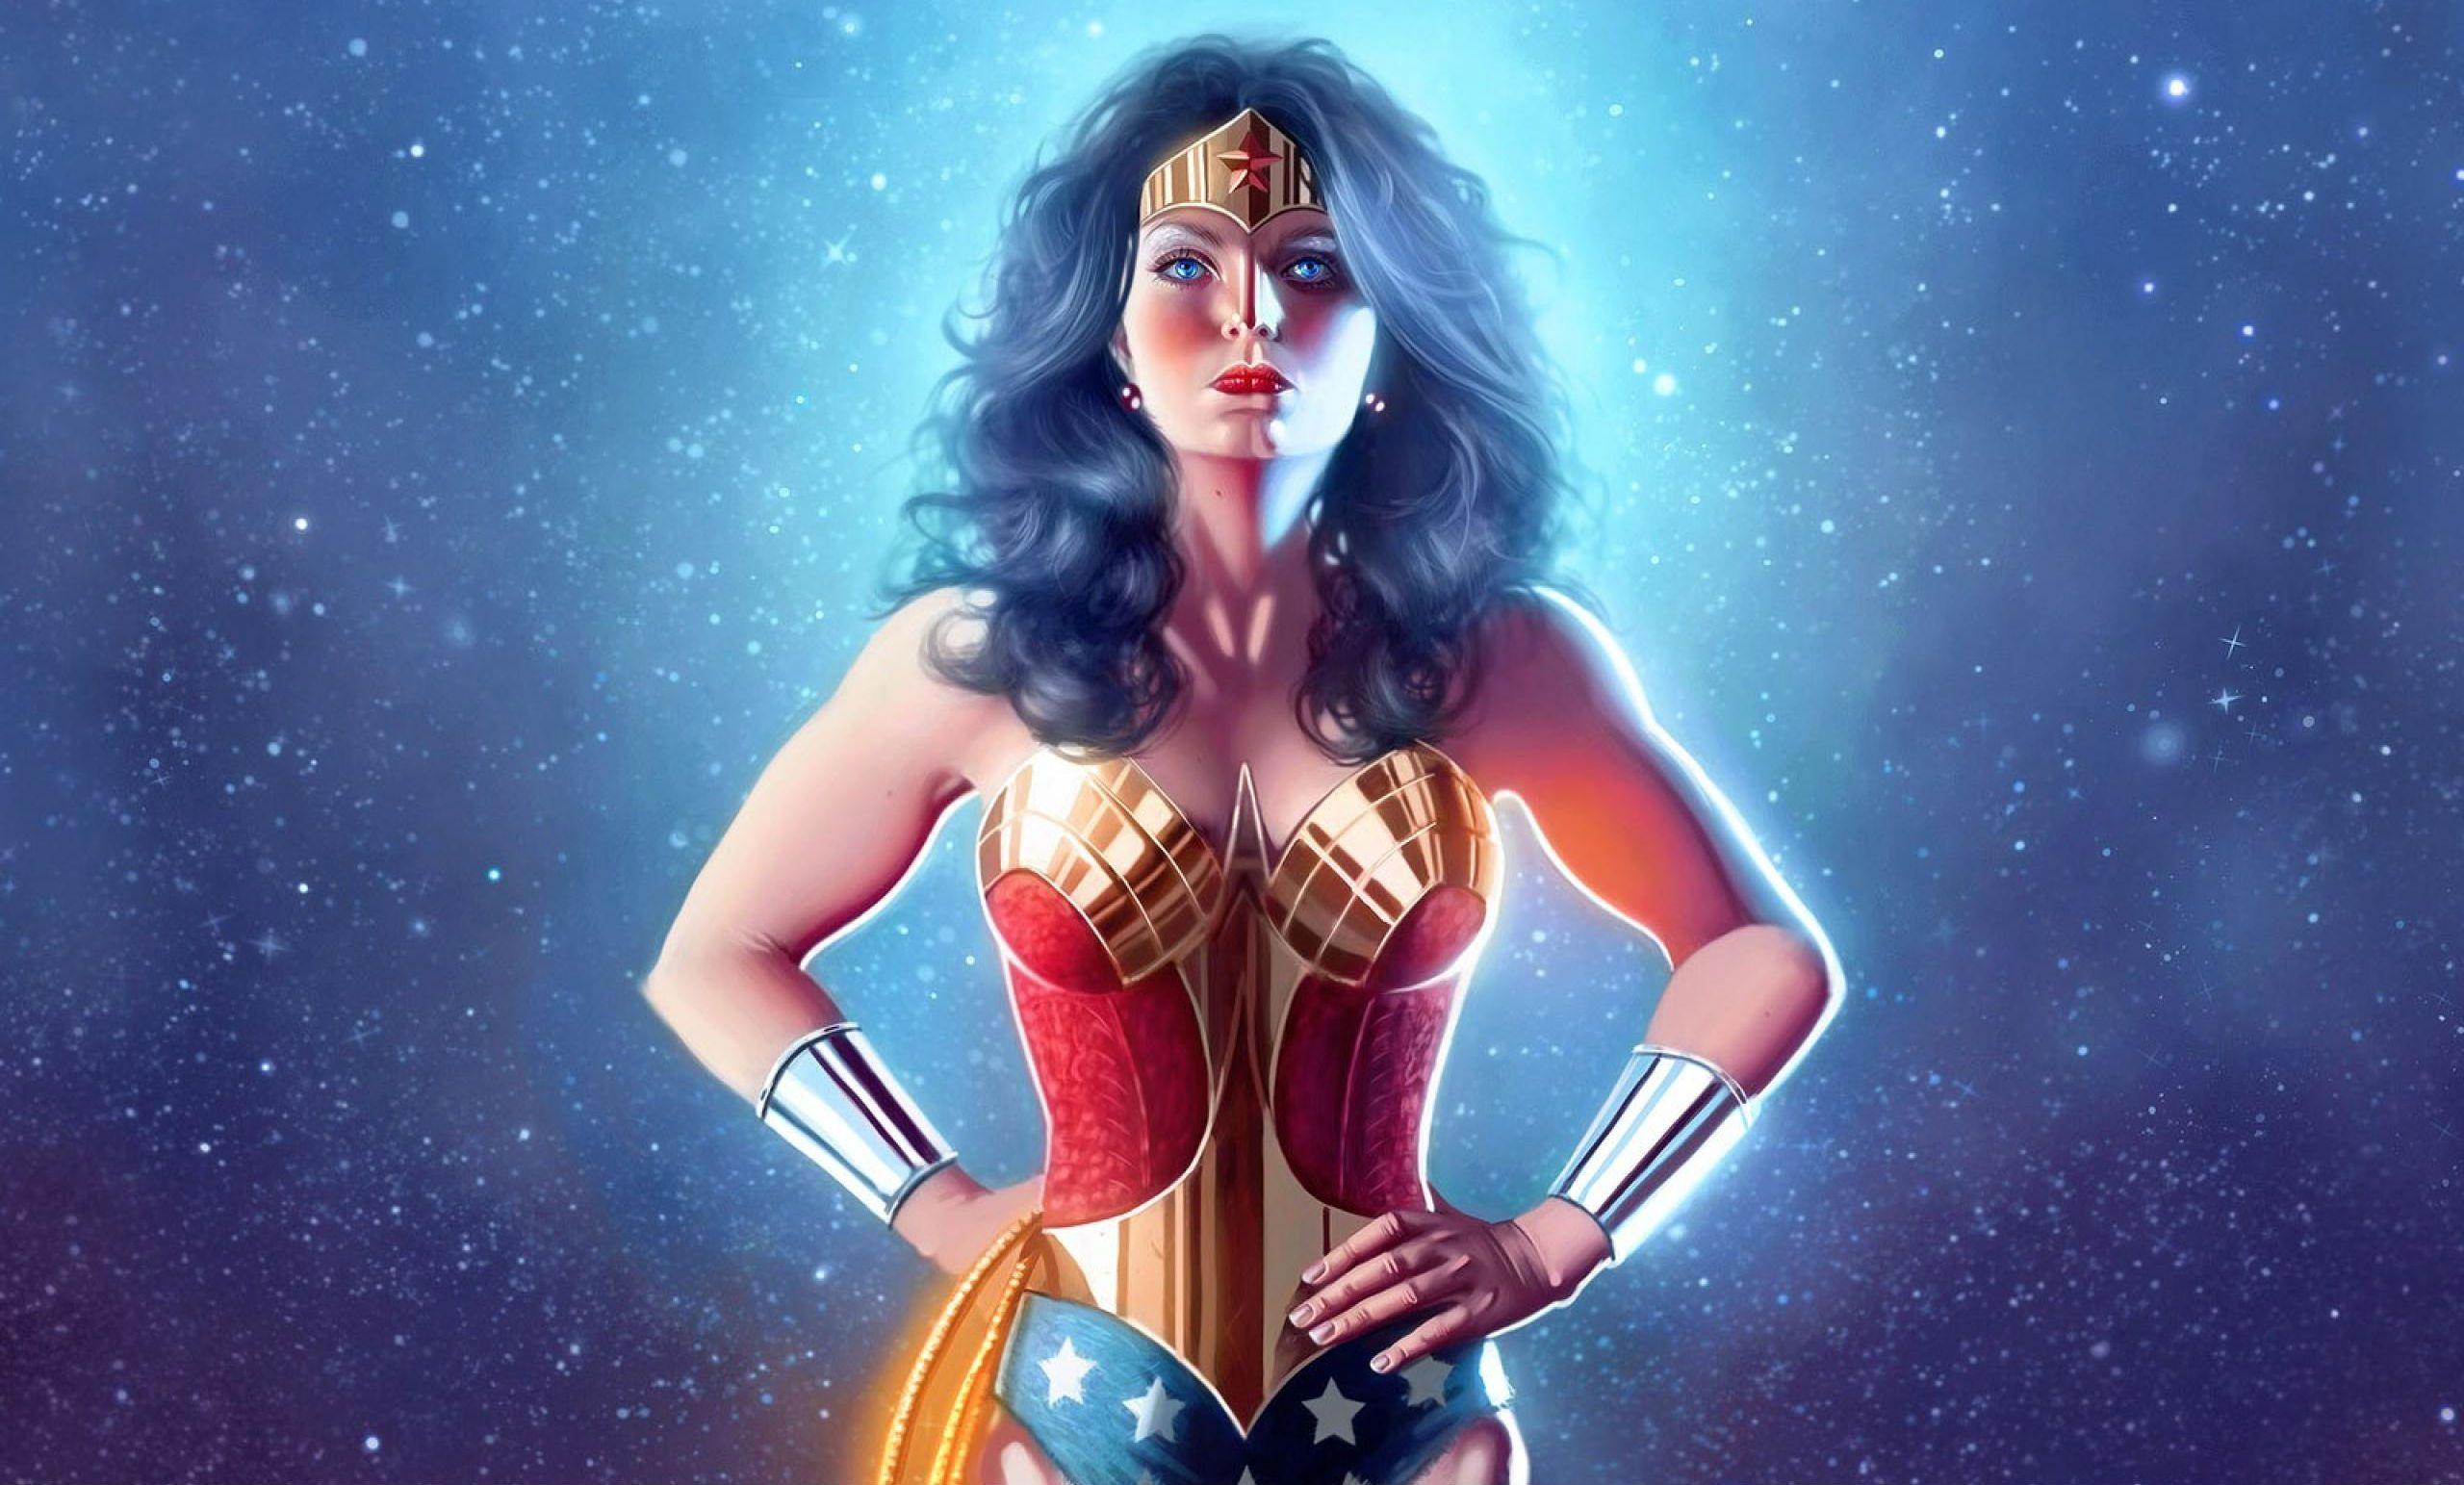 Cool Wonder Woman Wallpaper Download Female Superhero Wallpaper Chrome Geek